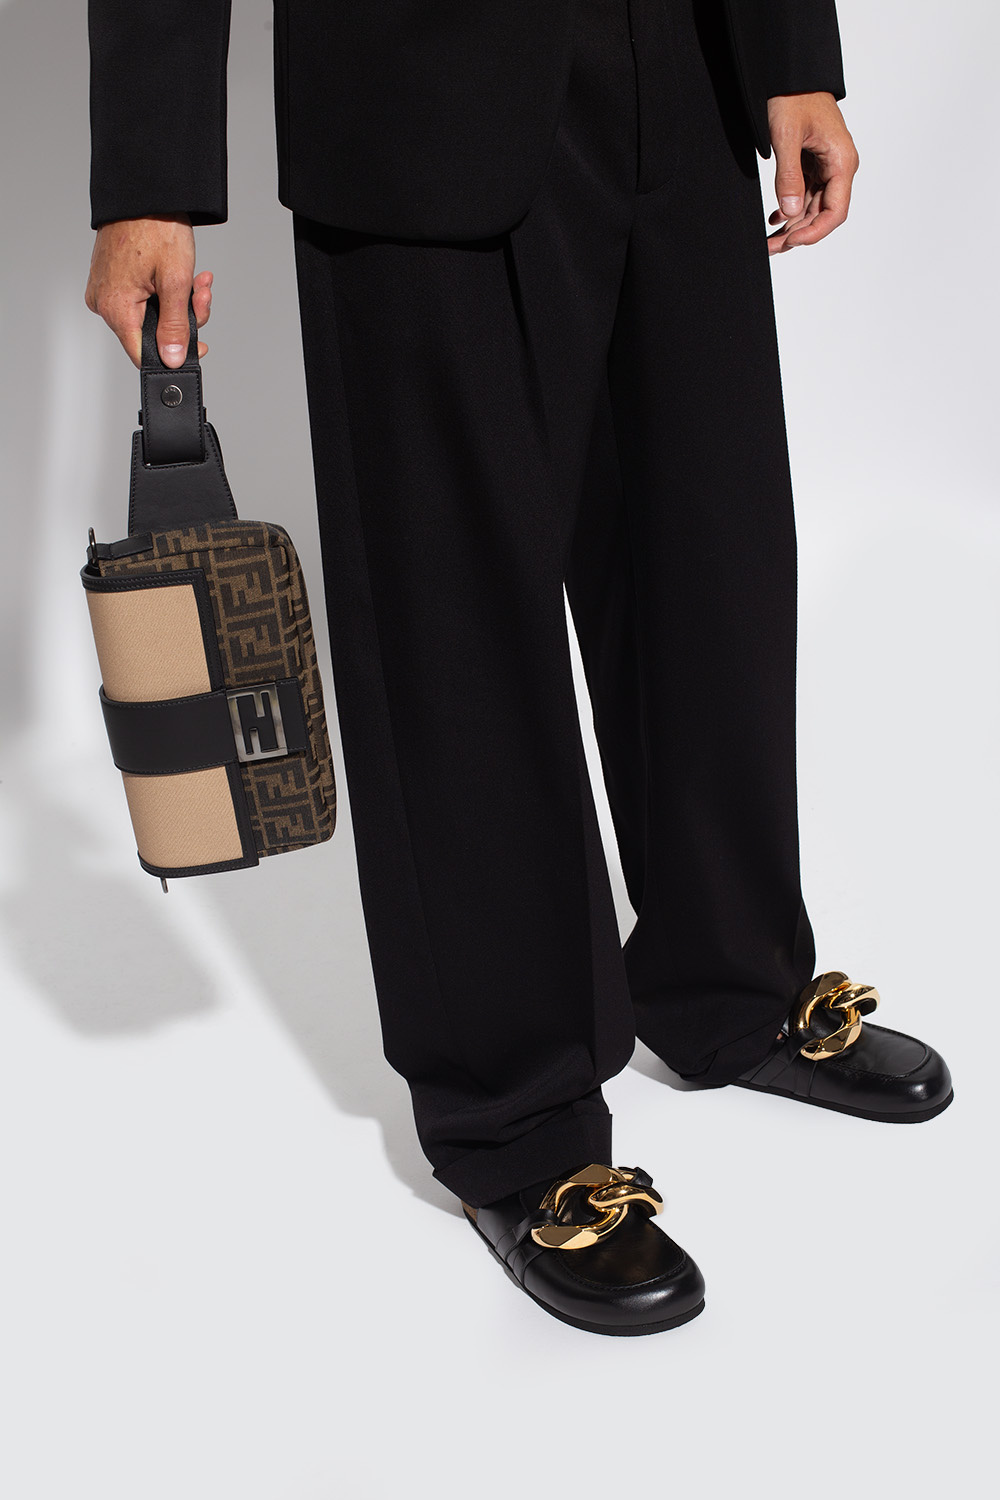 Fendi skirt fendi Peekaboo large model handbag in black leather